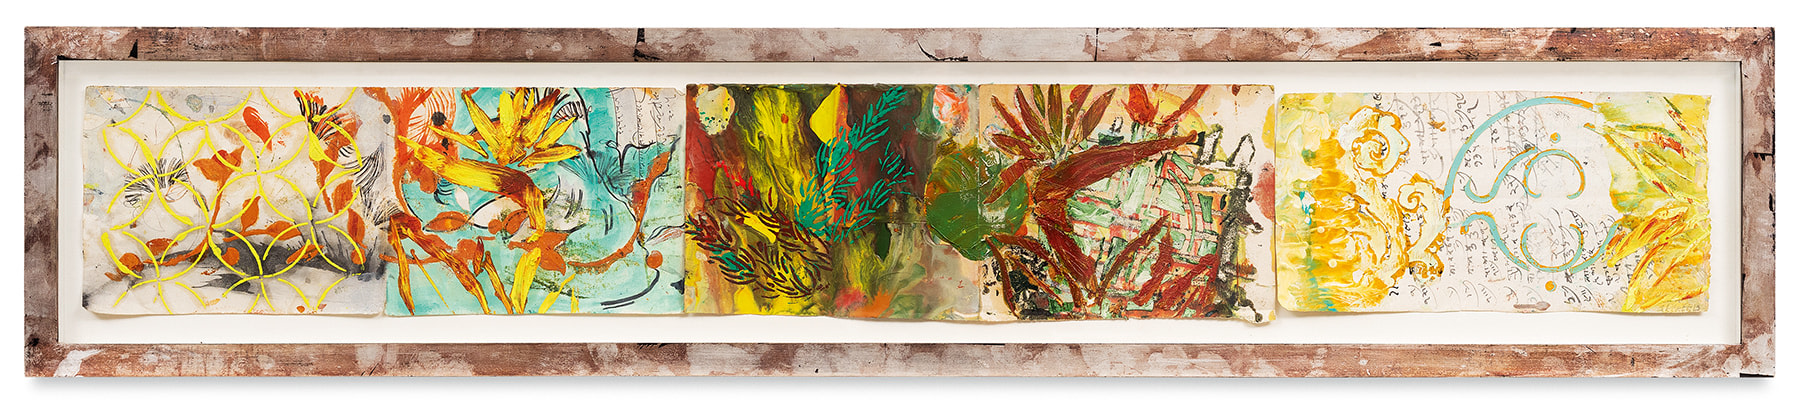 Ragamala 11, 2013,&nbsp;Oil stick, encaustic, vintage Indian paper, in artist&#039;s frame,&nbsp;10 x 51 inches,&nbsp;25.4 x 129.5 cm,&nbsp;MMG#30619